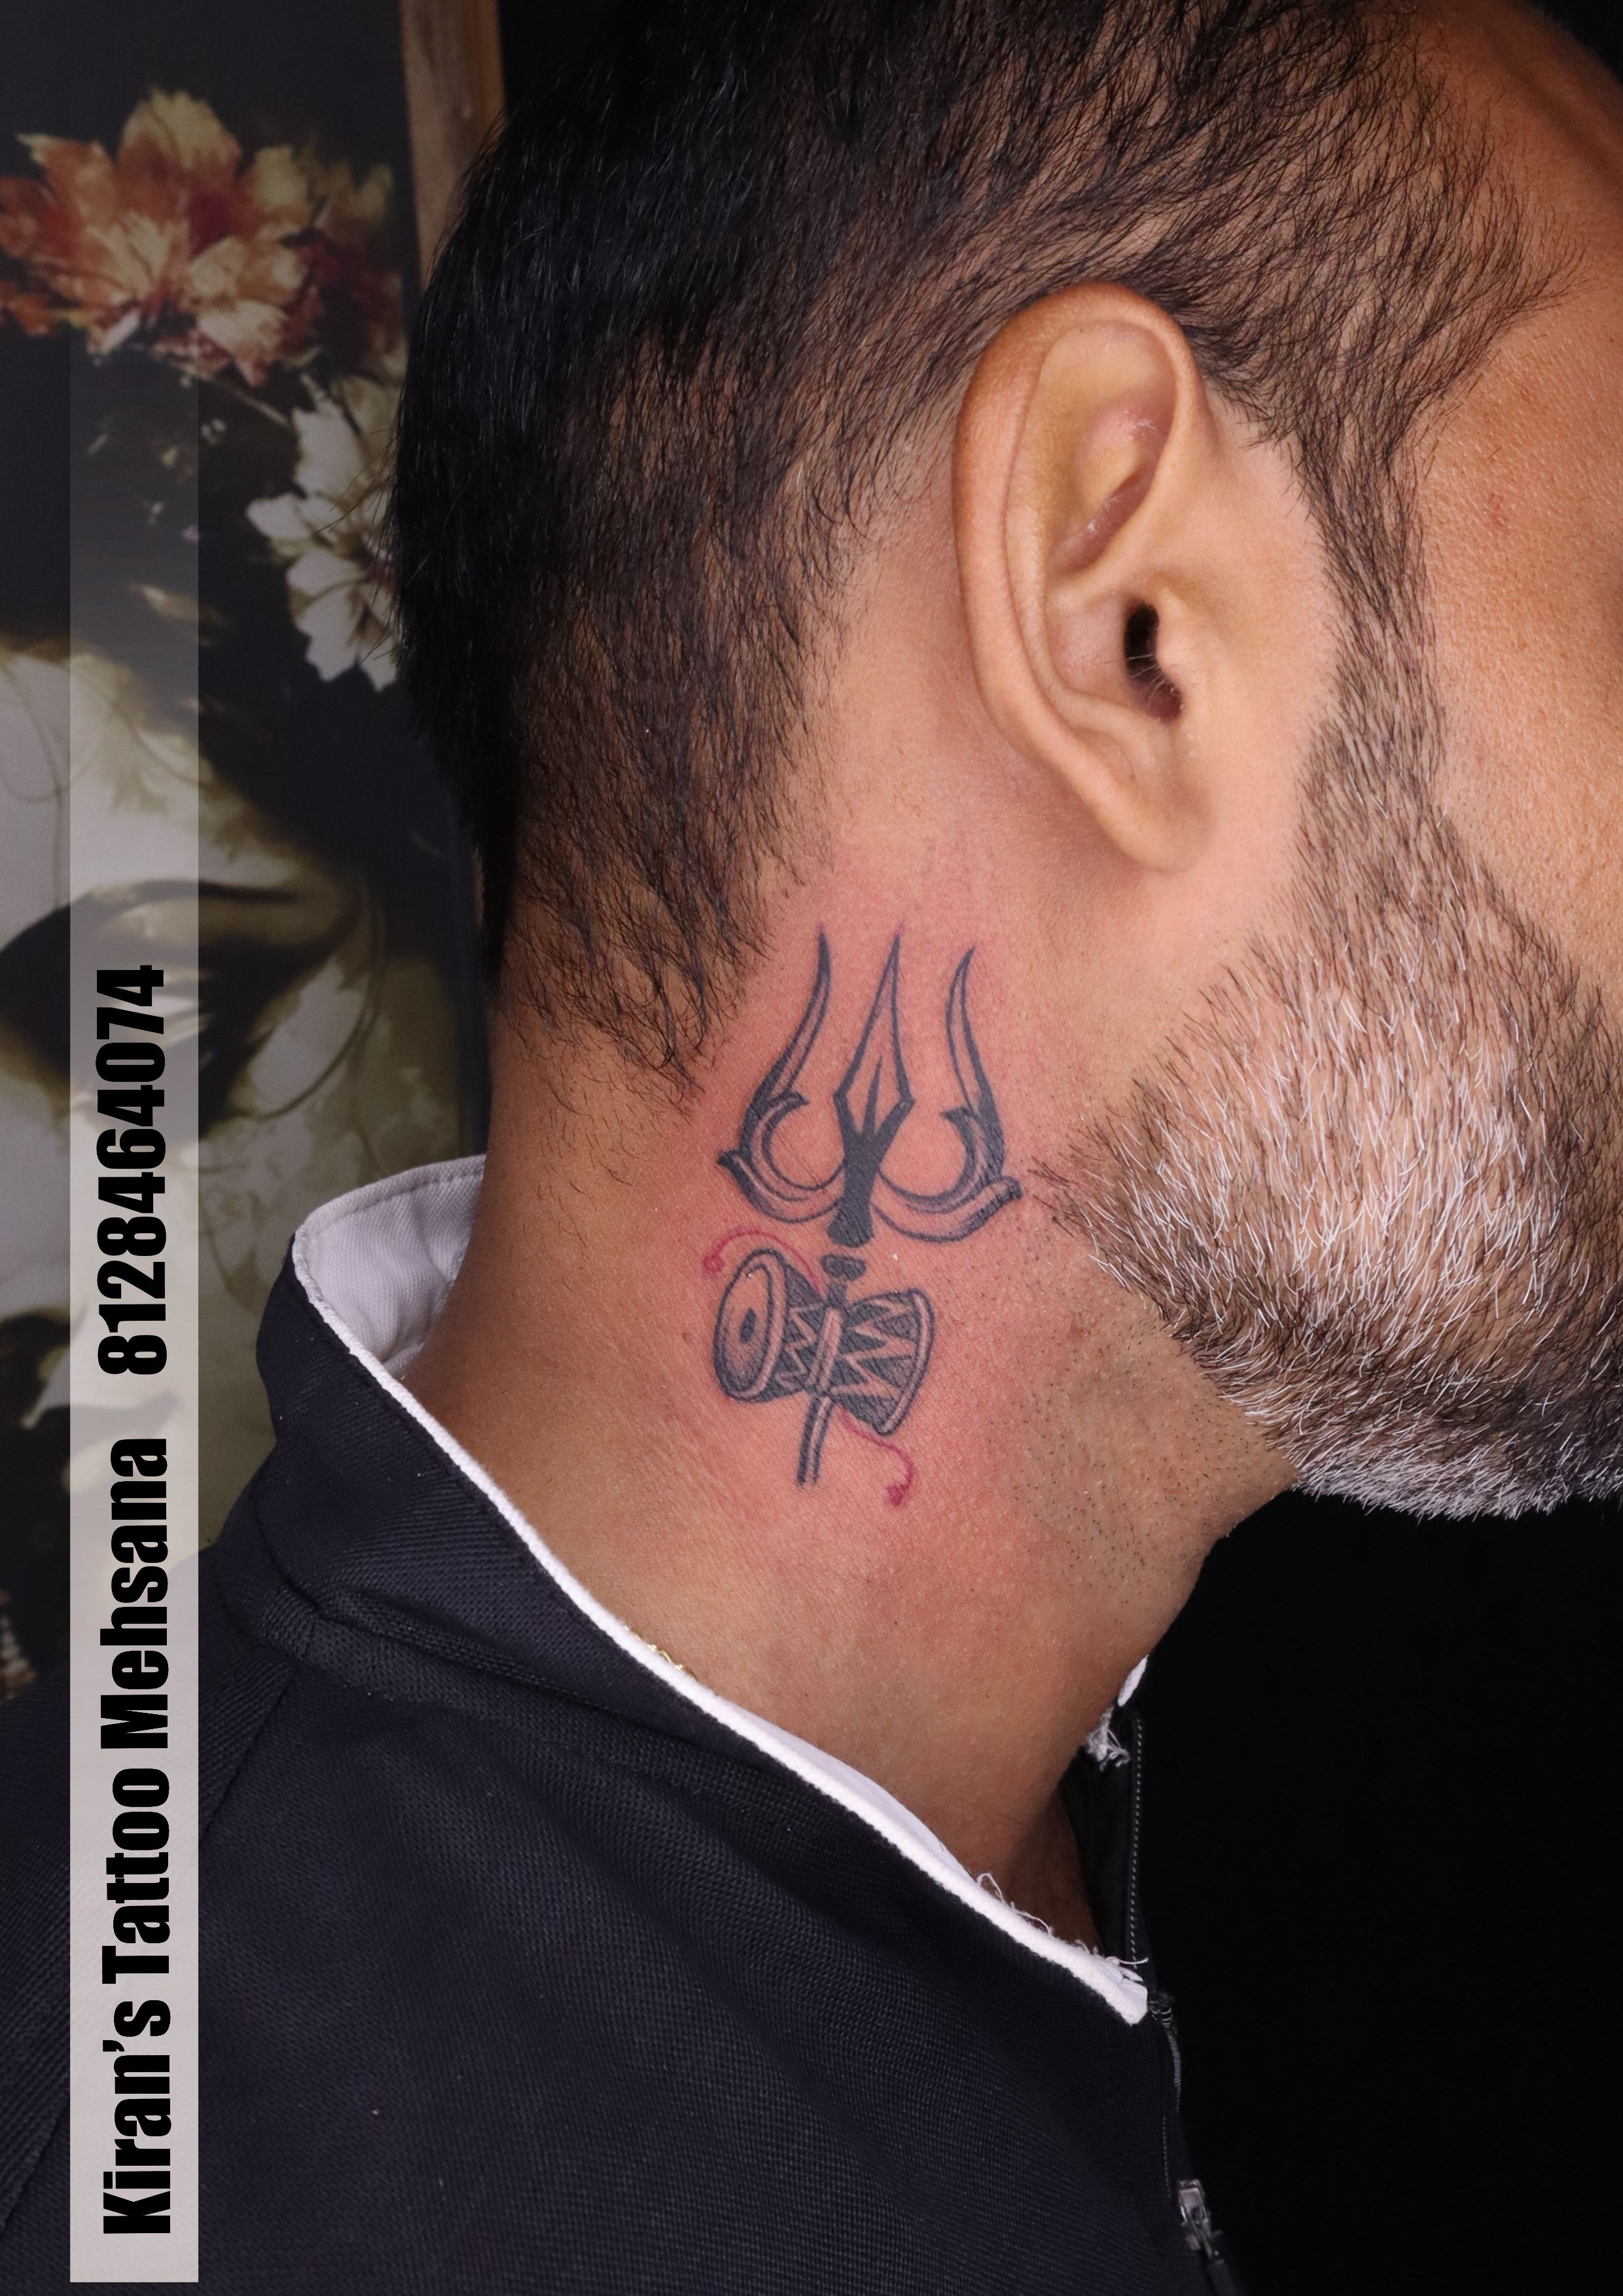 Neck Tattoo Lord Shiva degine by Lemon Tattoo Tinsukia Assam India ❤️  8433817335 Permanent Tattoo and Tattoo Removal also done… | Instagram